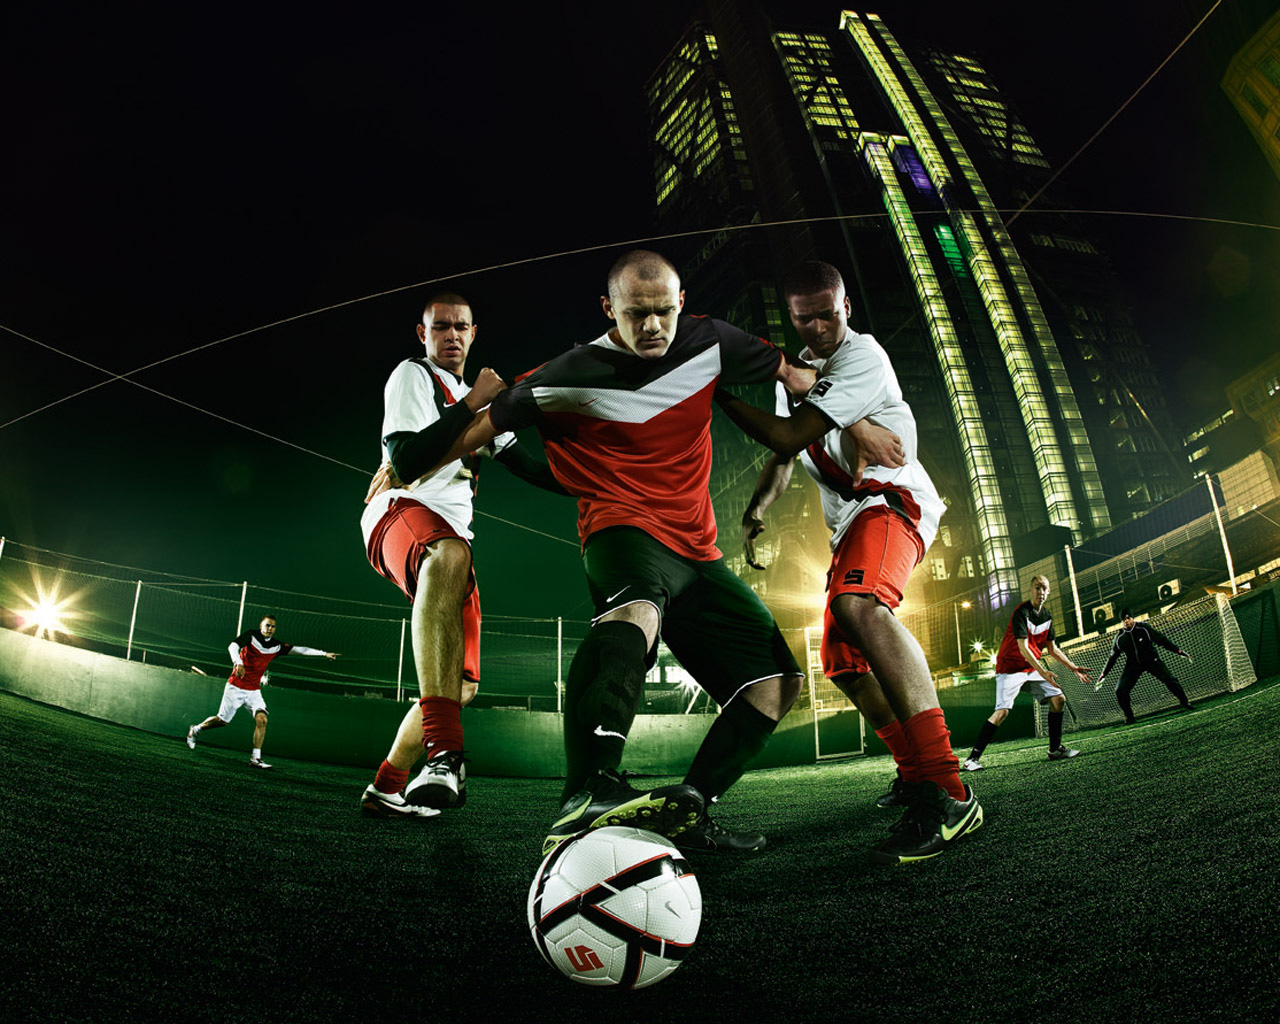 Nike Football Free Wallpaper Hd Downloads   Football Wallpaper HD